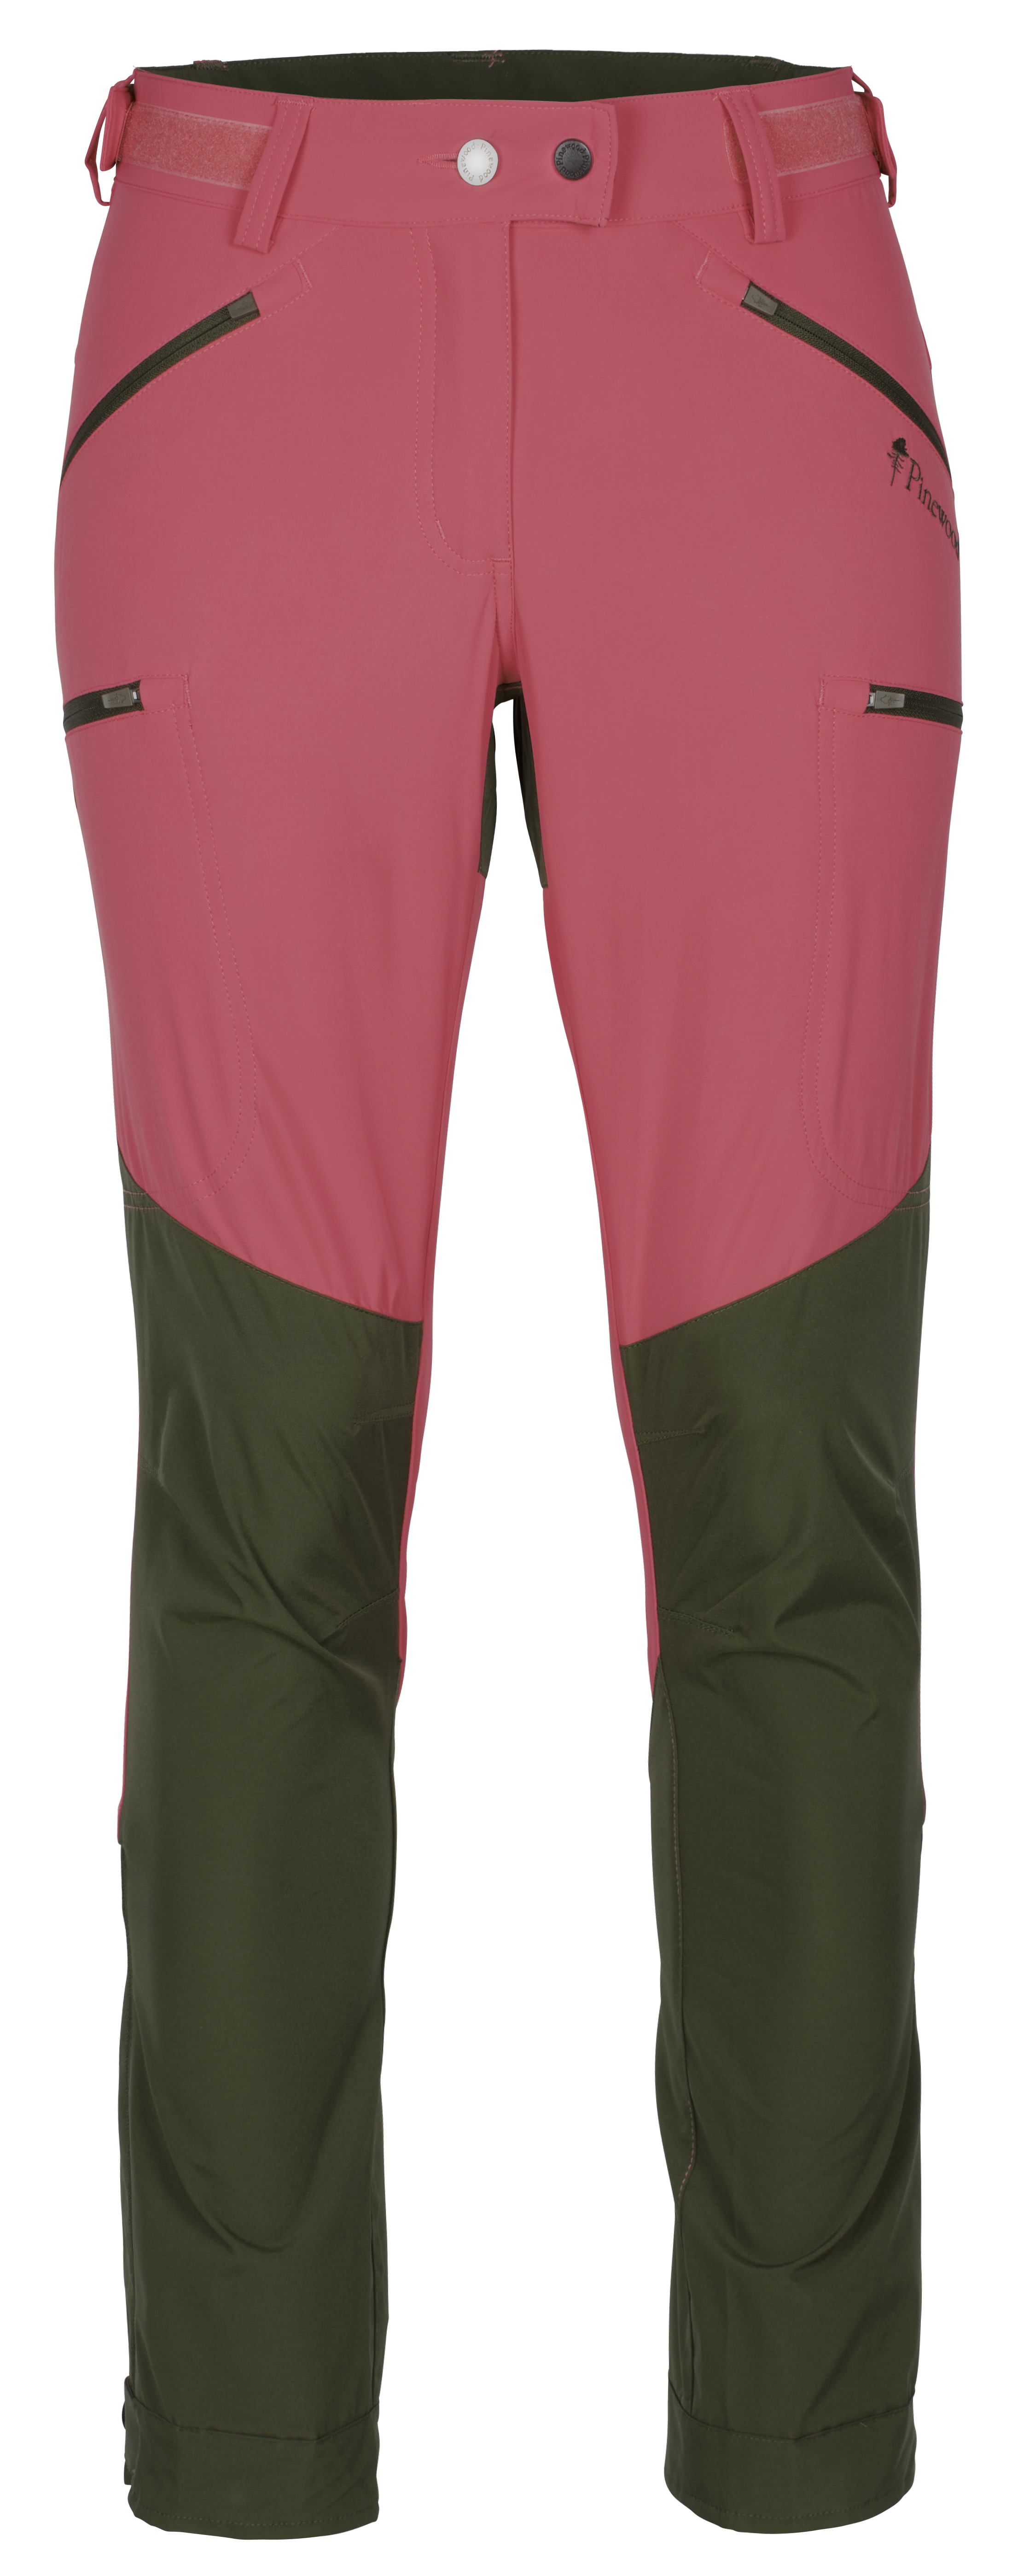 Pinewood Women’s Abisko/Brenton Trousers Pink Blush/Mossgreen